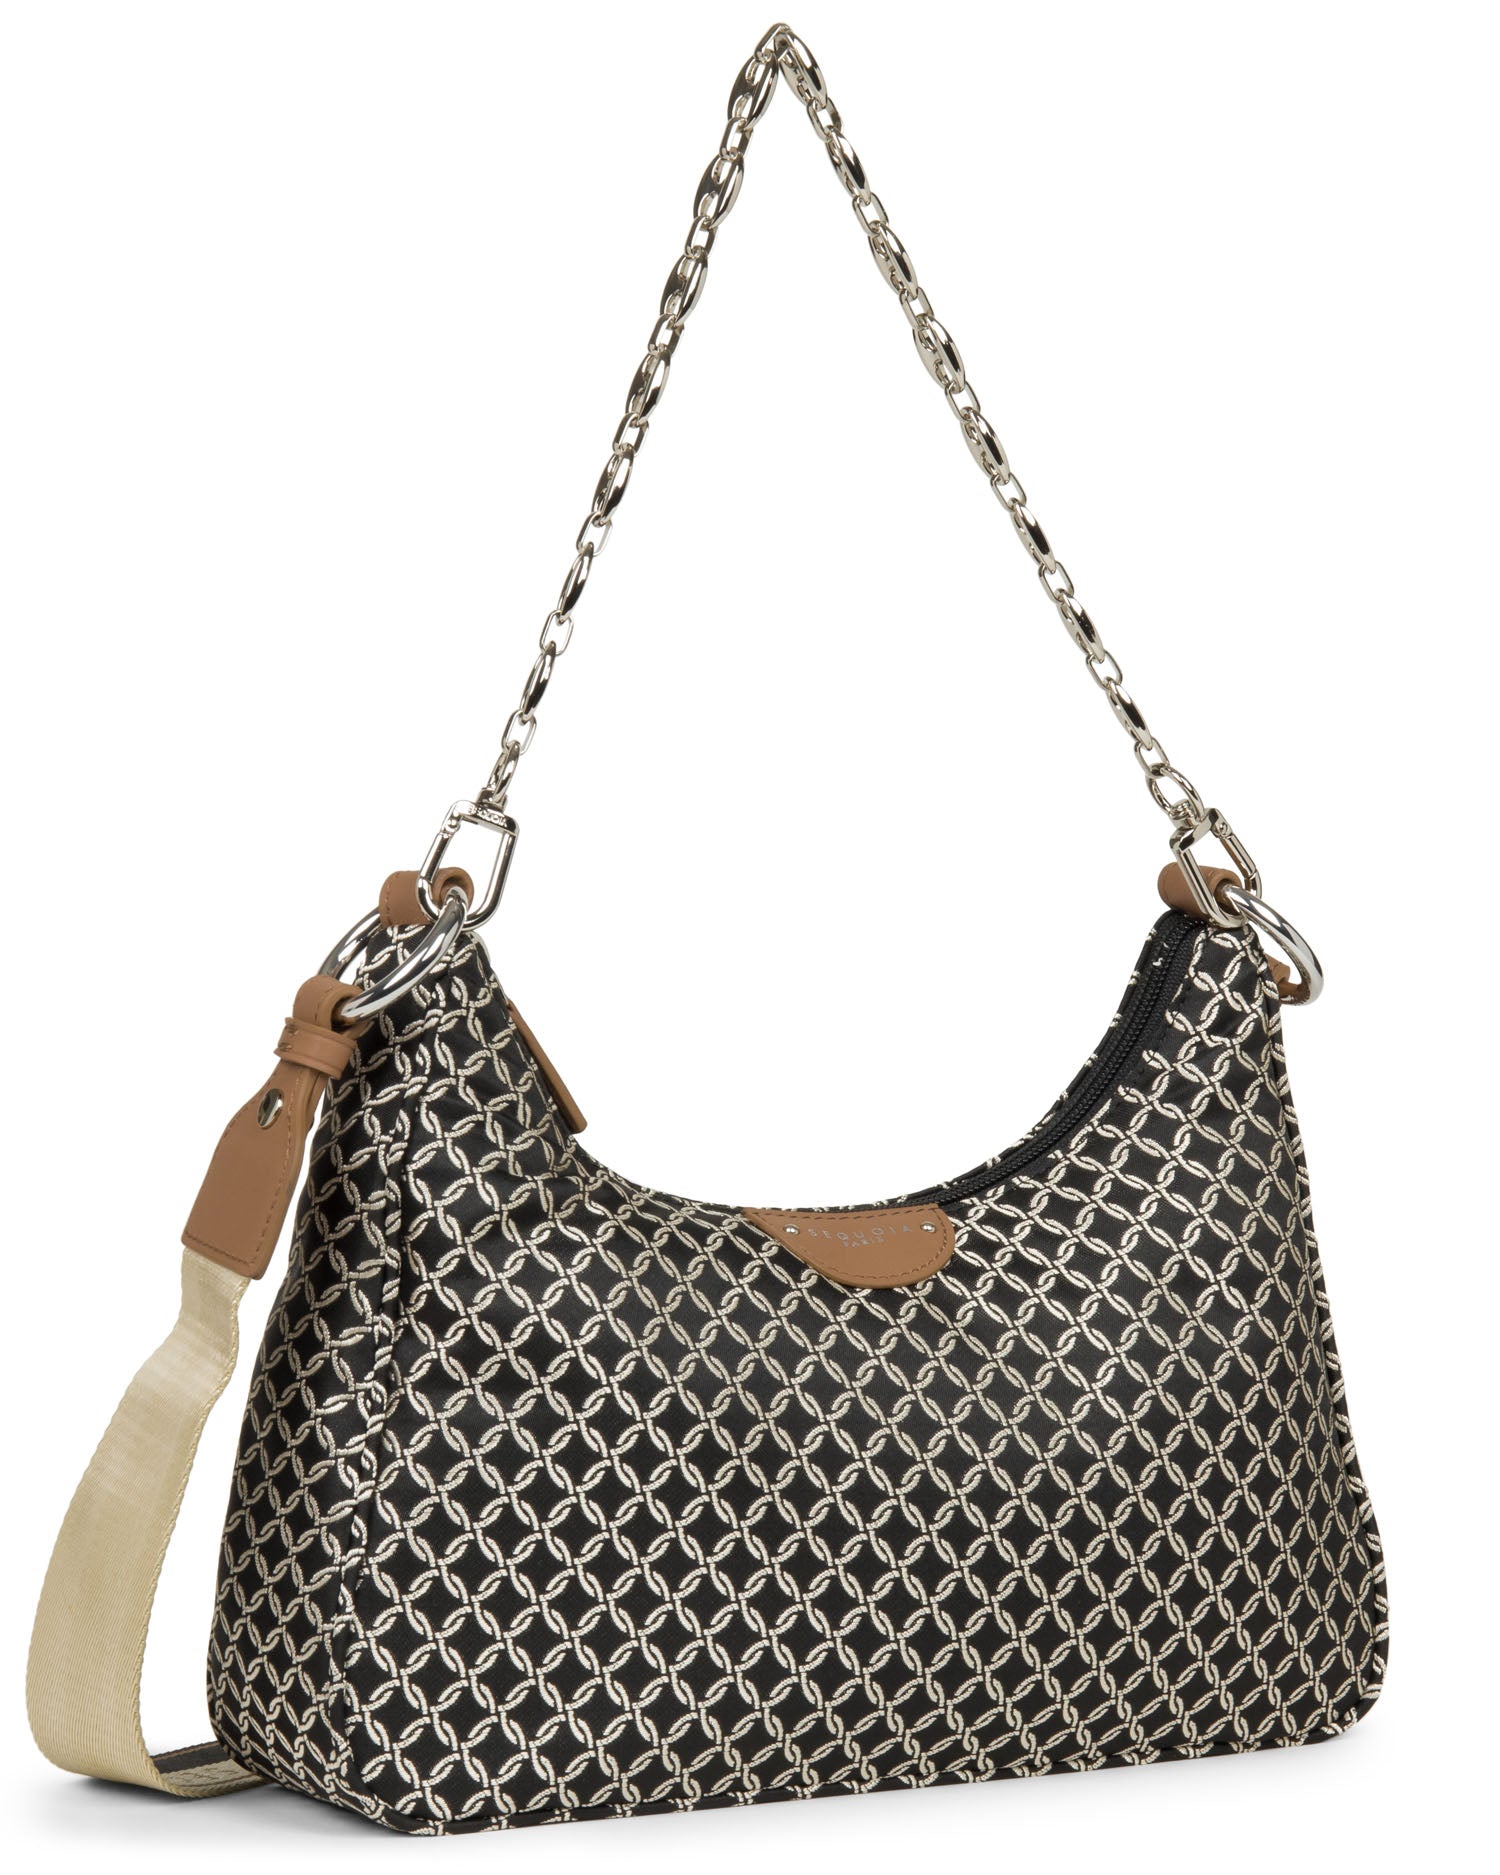 MARNI: Trunk Soft bag in tumbled leather - Mastic | Marni shoulder bag  SBMP0103U0P2644 online at GIGLIO.COM